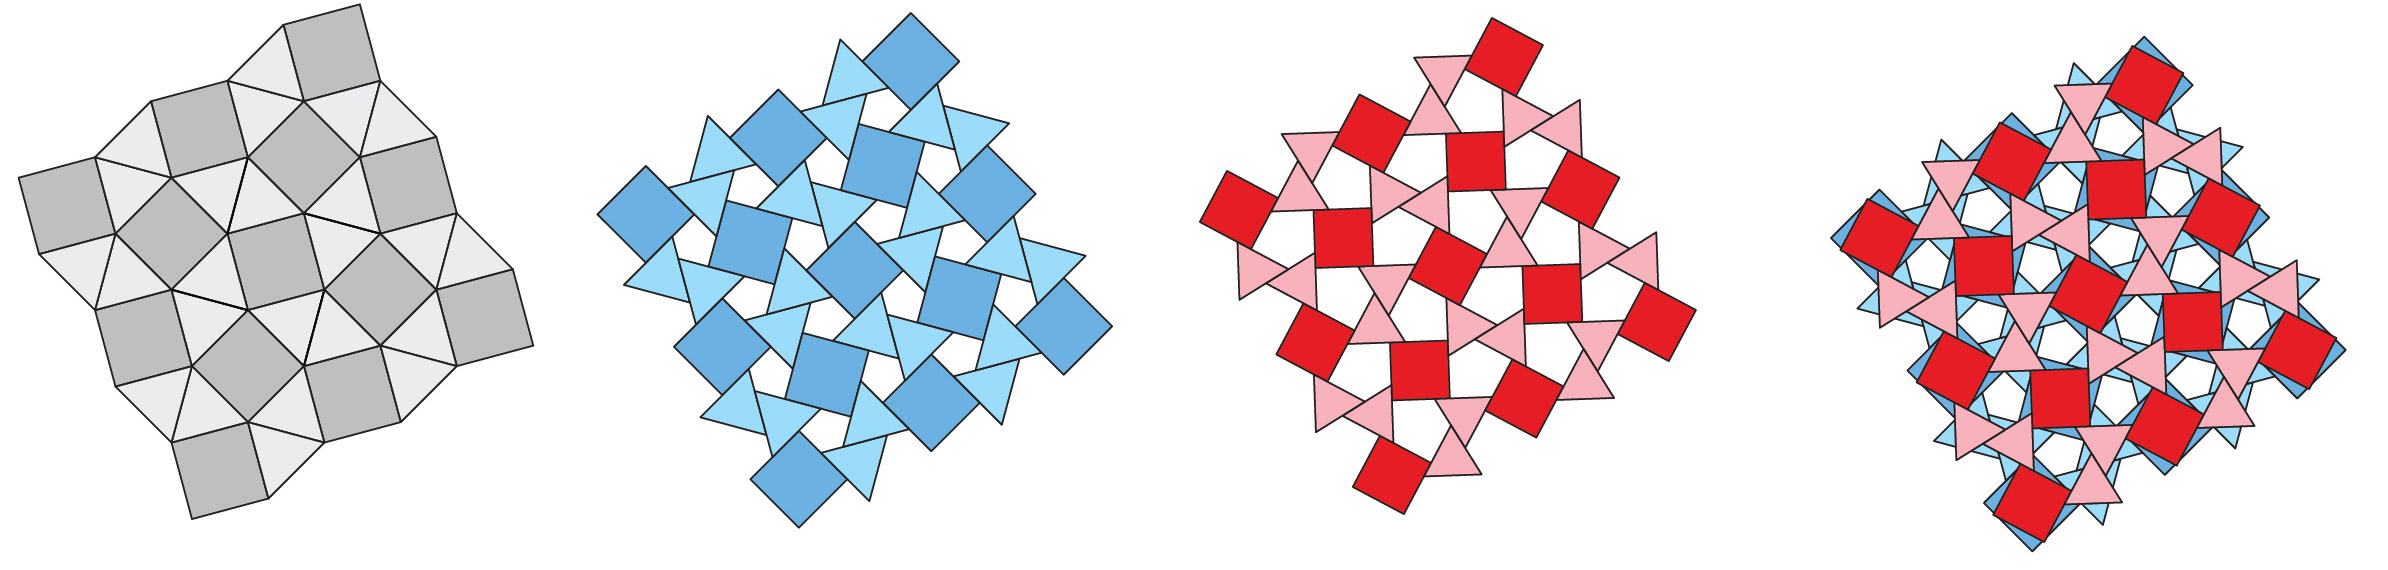 Twisted_tilings-EB-EDIT-Red-Blue.jpg?w=2